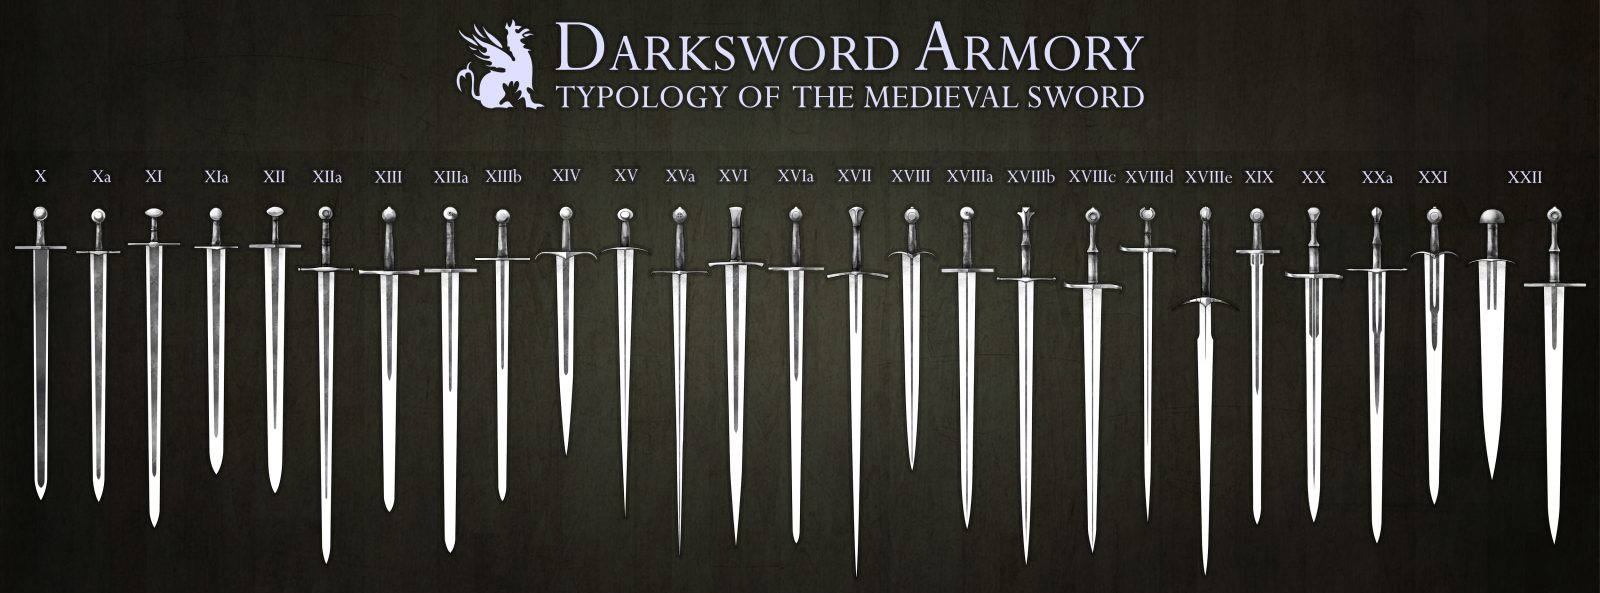 Typology-Darksword-Armory-medieval-swords